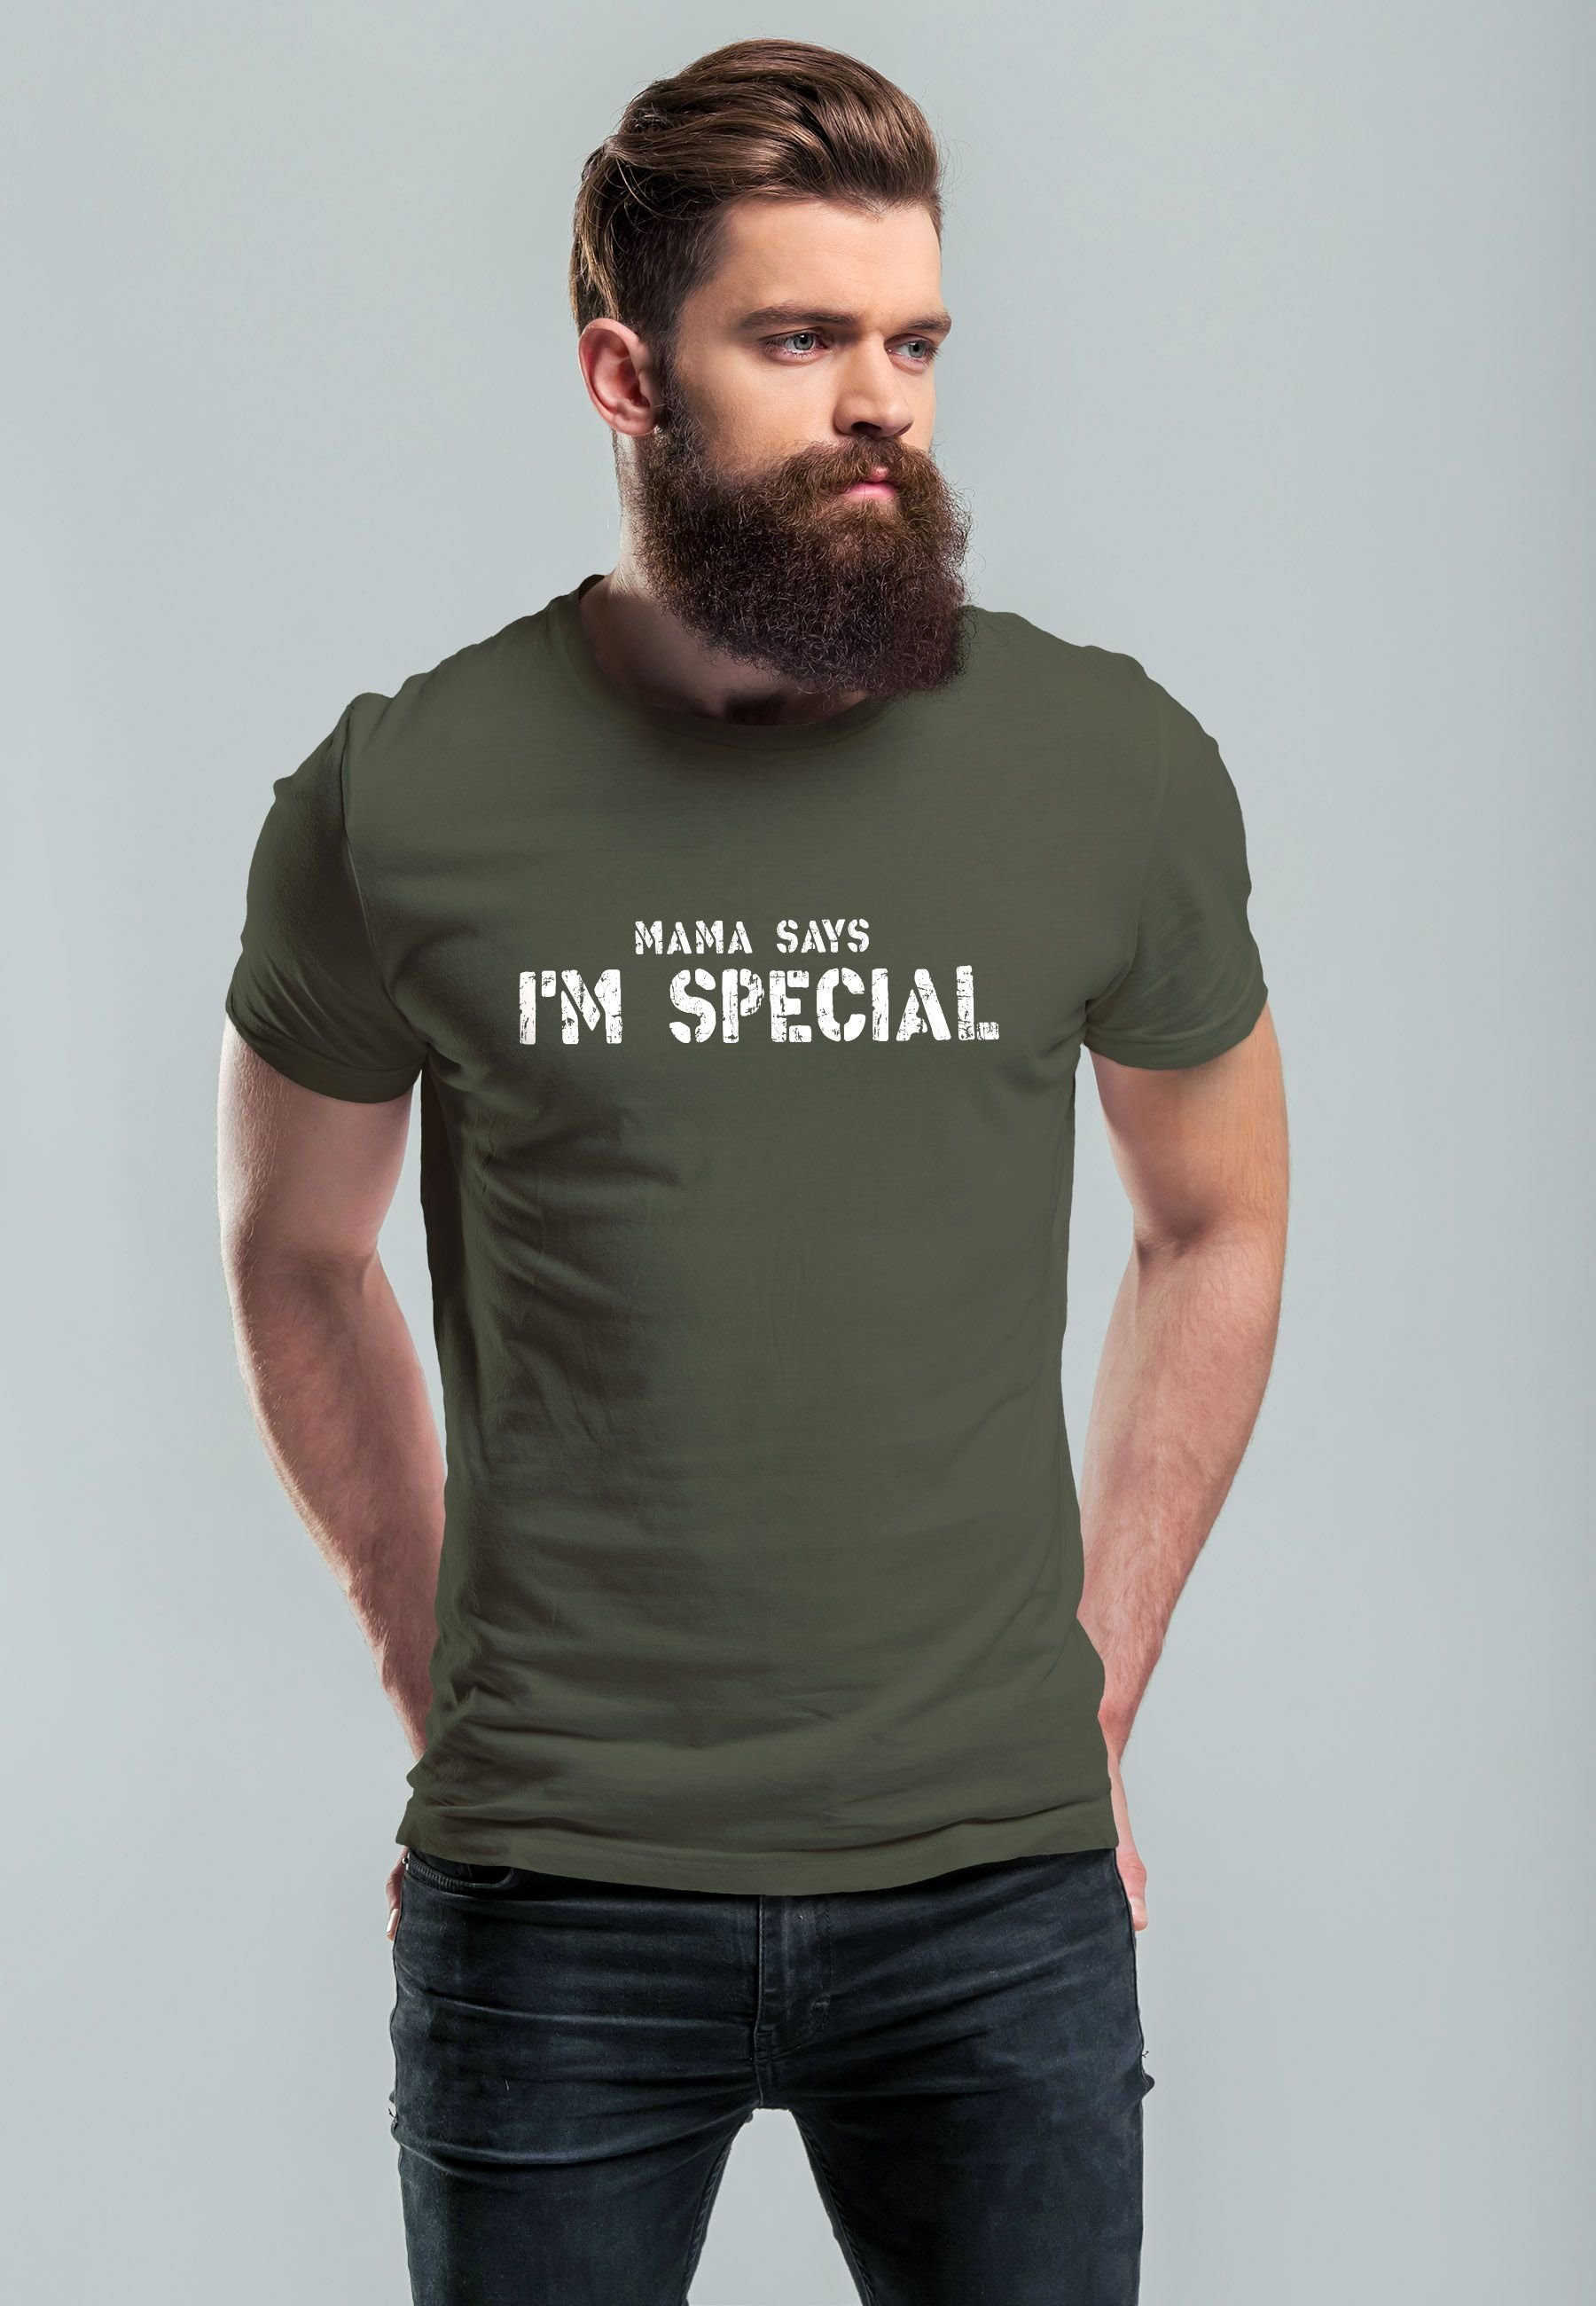 Neverless Mama T-Shirt mit Says Sarkasmus Ironie Print Am Spruch Special army Herren A I lustig Print-Shirt